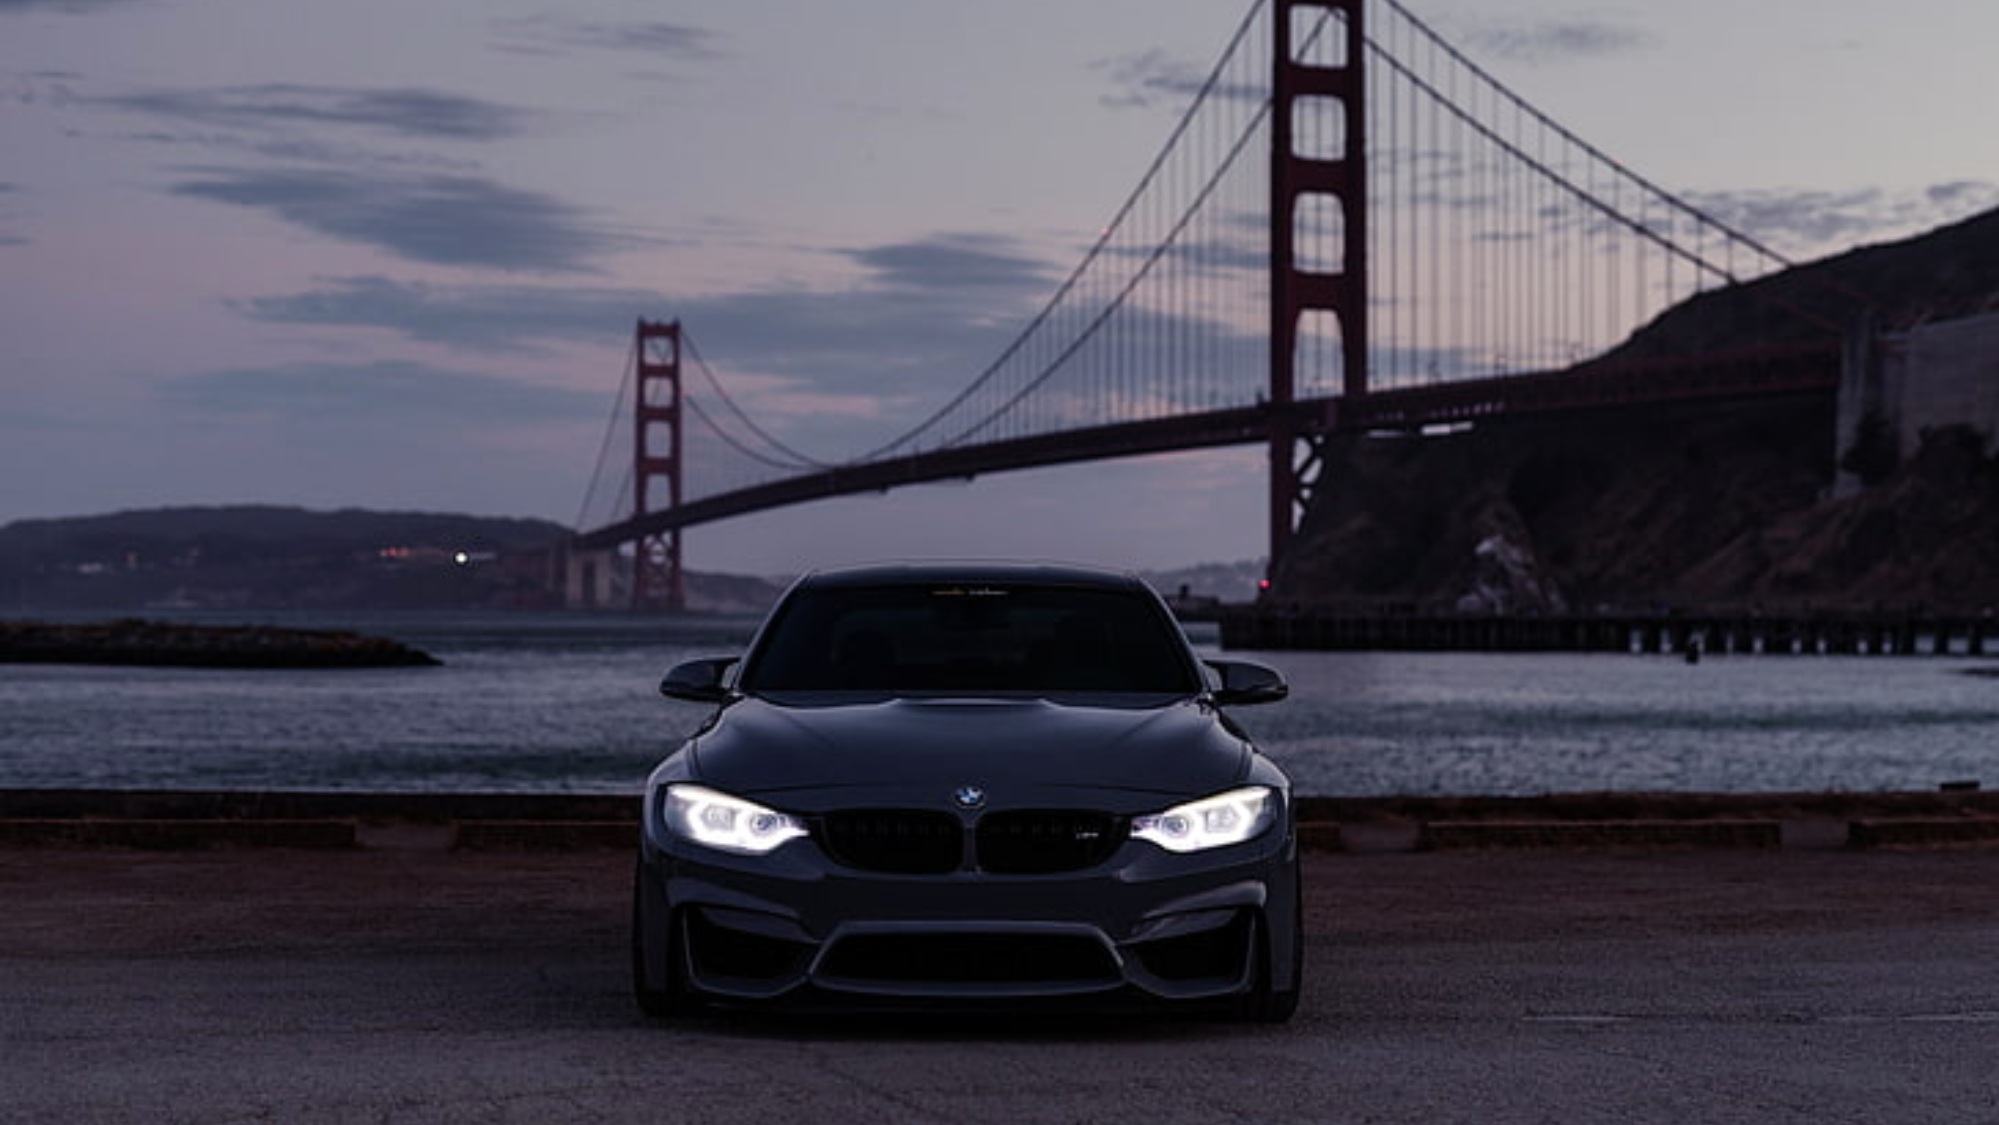 BMW M3 in front of Golden Gate Bridge